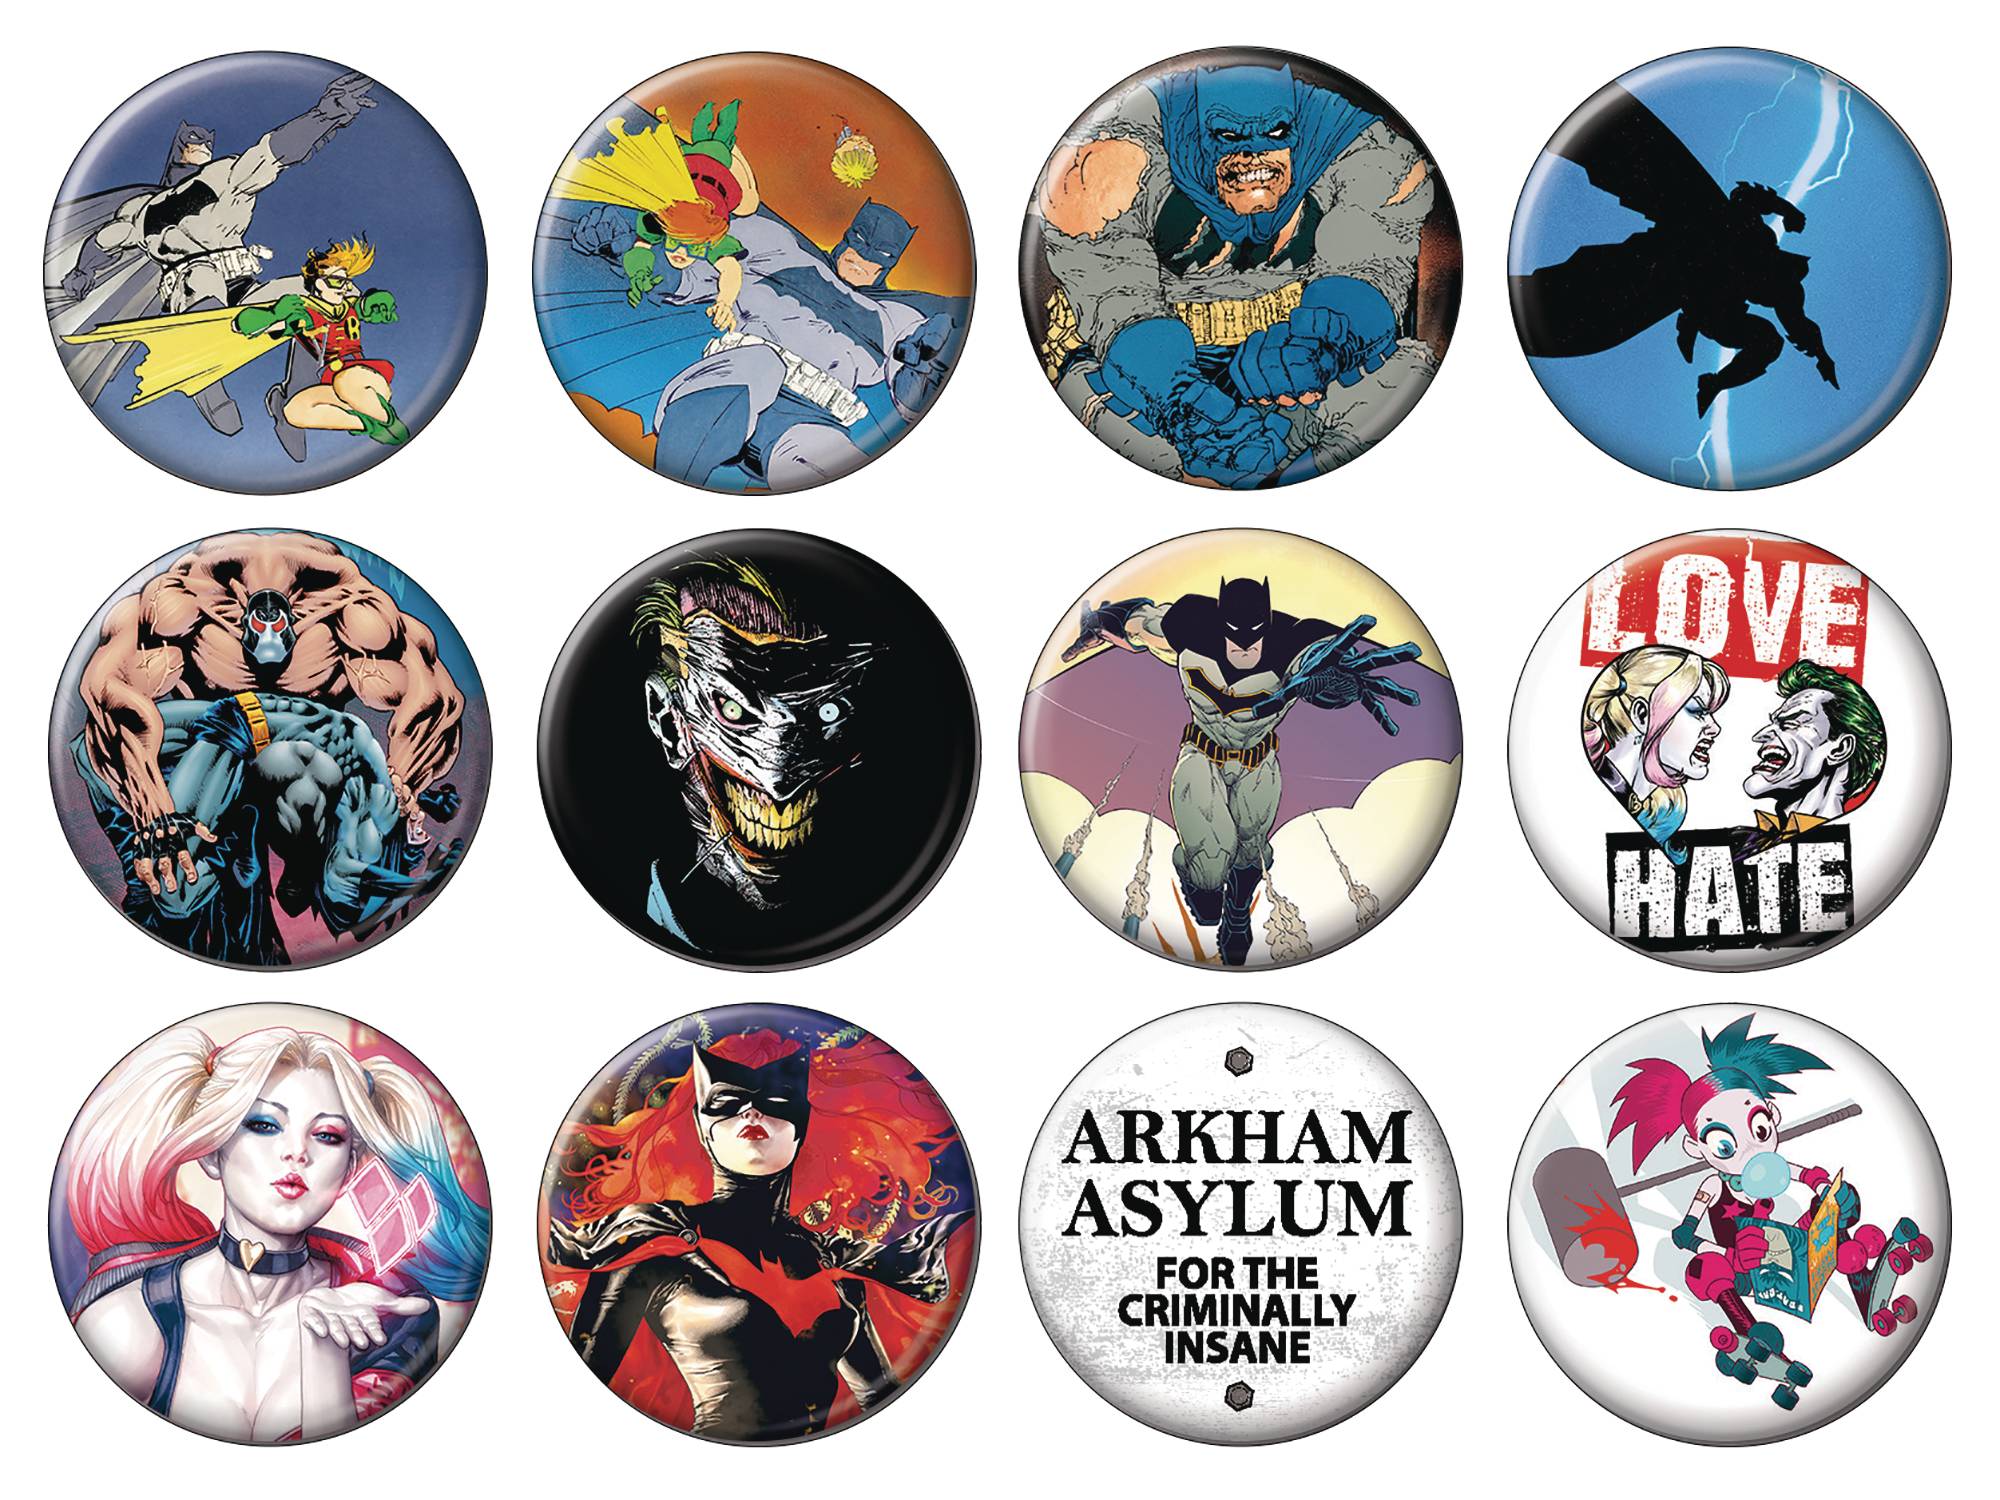 DC Heroes Batman 144 Piece Button Assortment Display